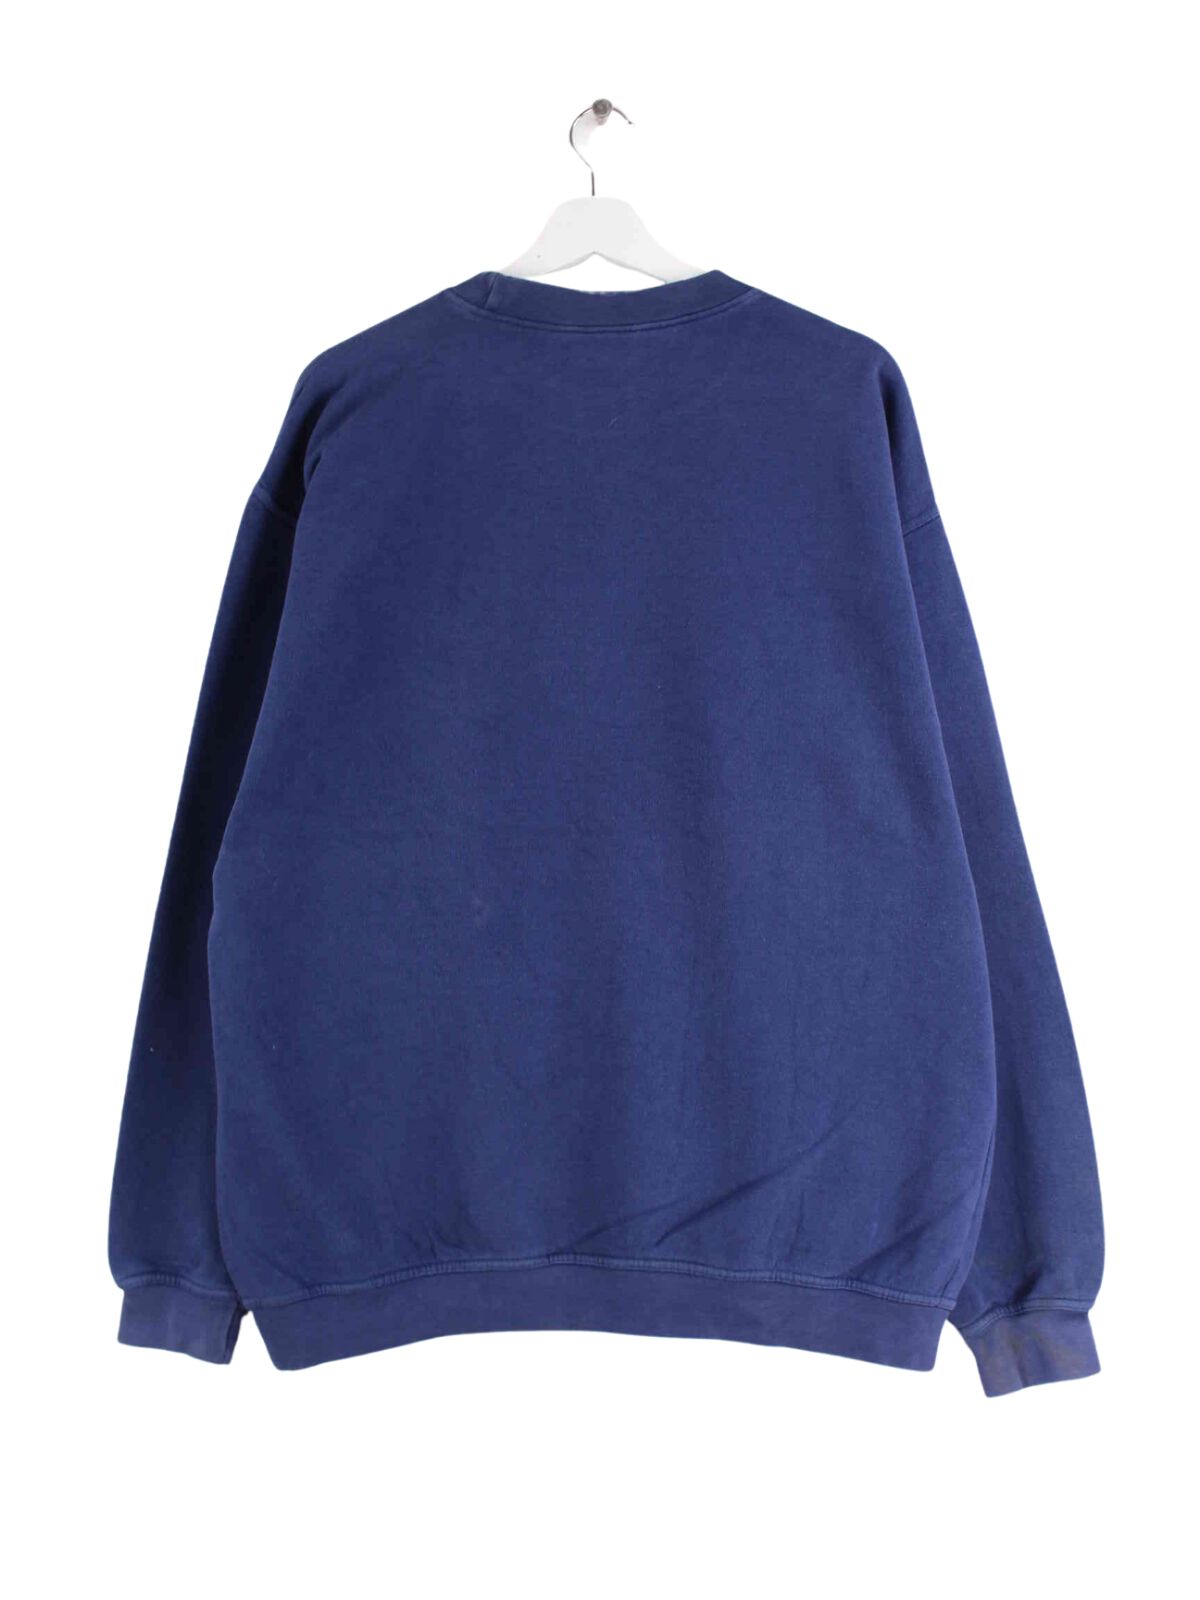 Adidas 90s Vintage Embroidered Sweater Blau XL (back image)